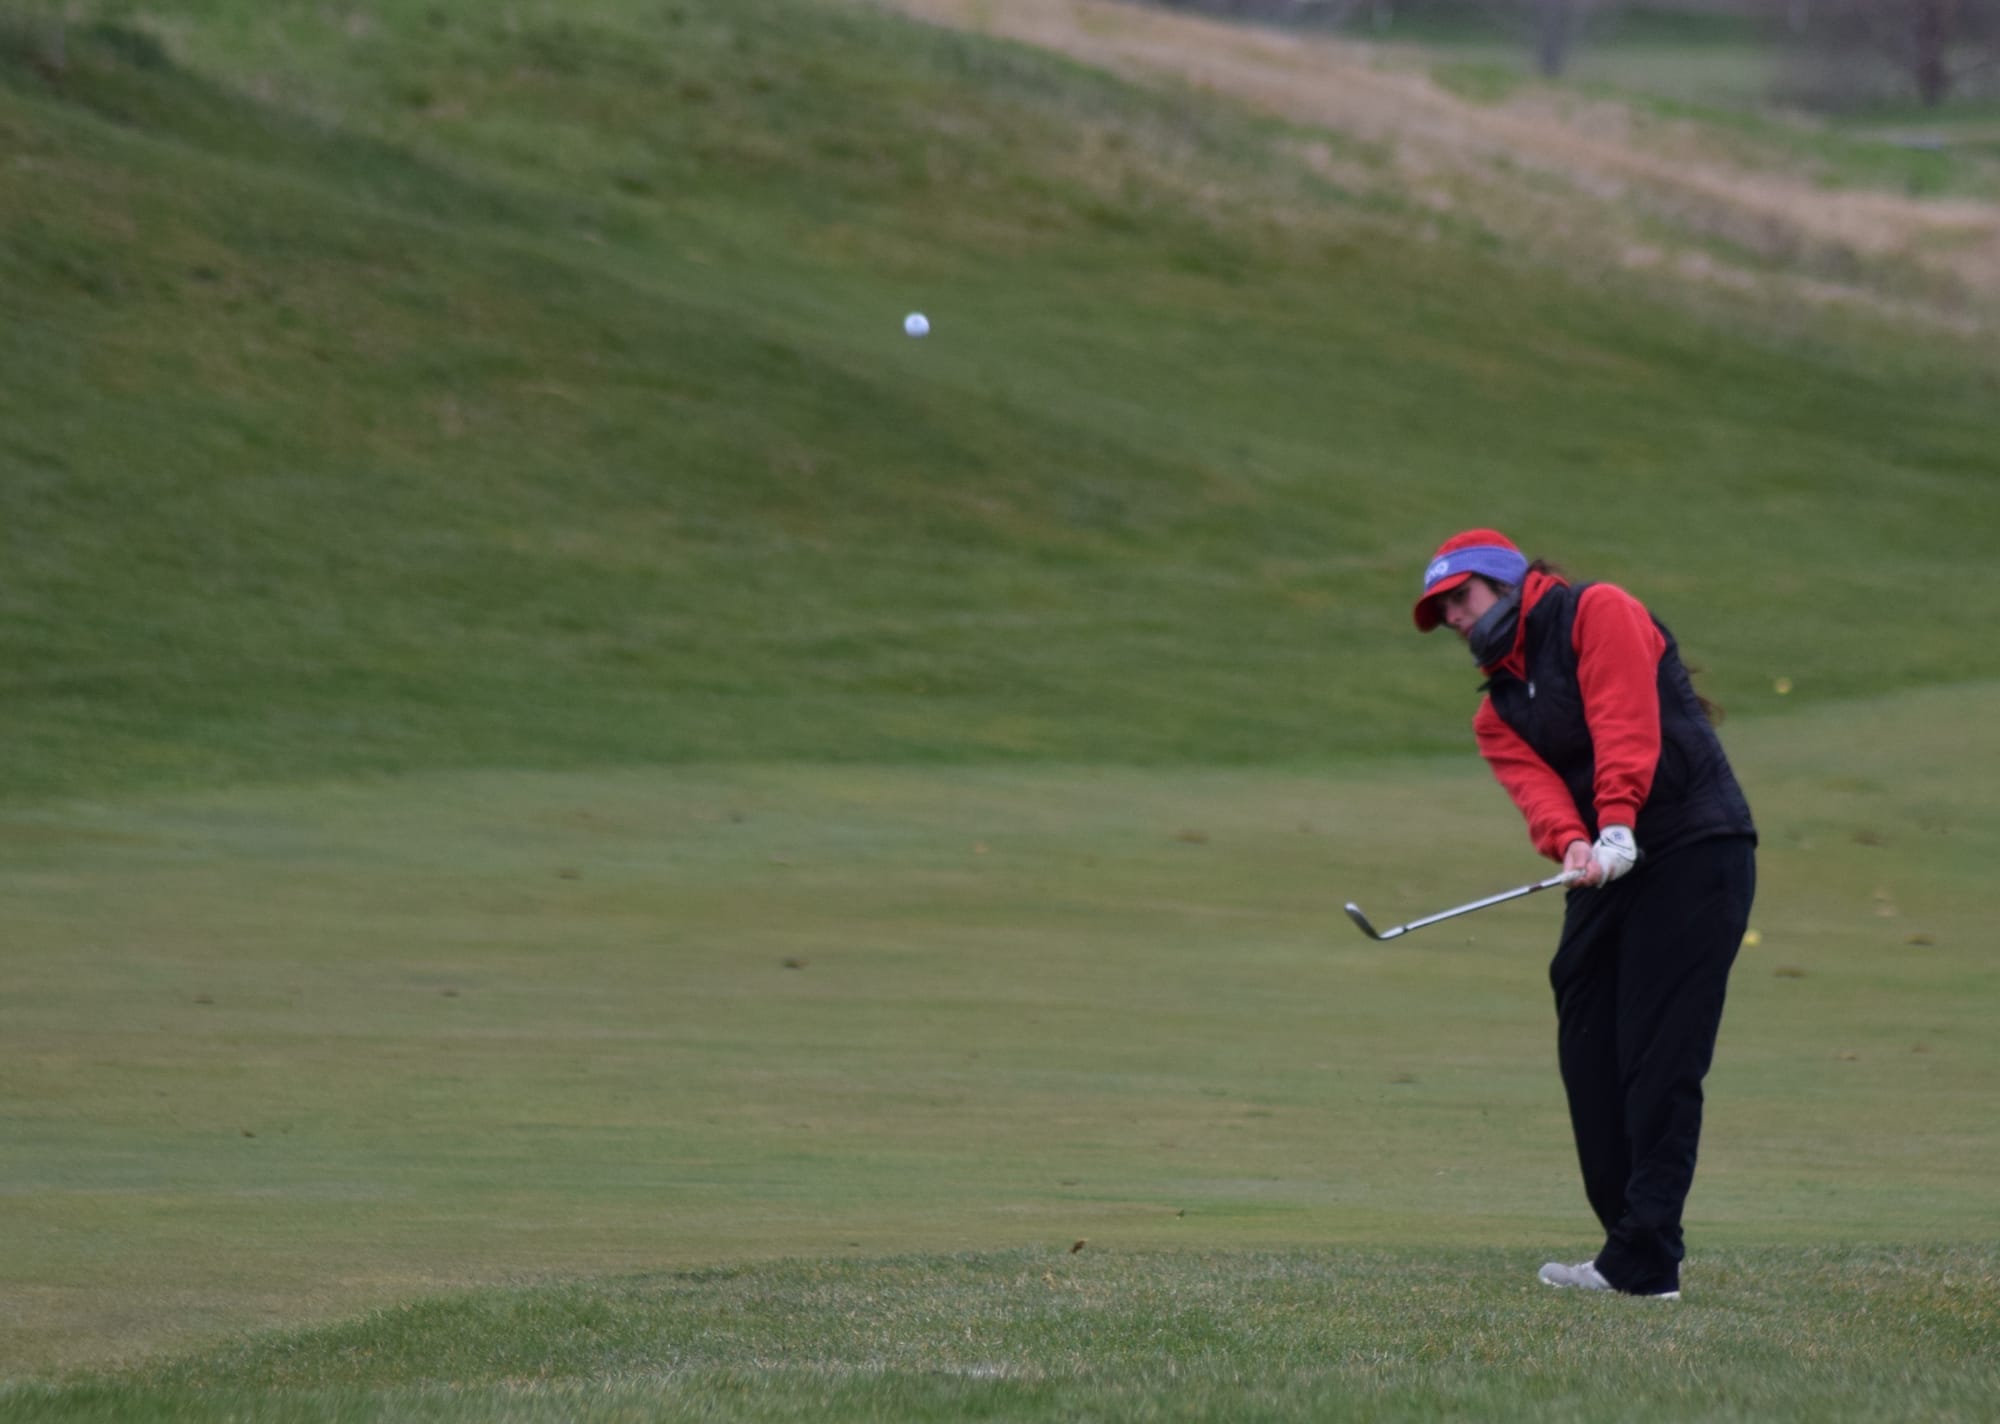 Both Newman golf teams teed up for success as season ends